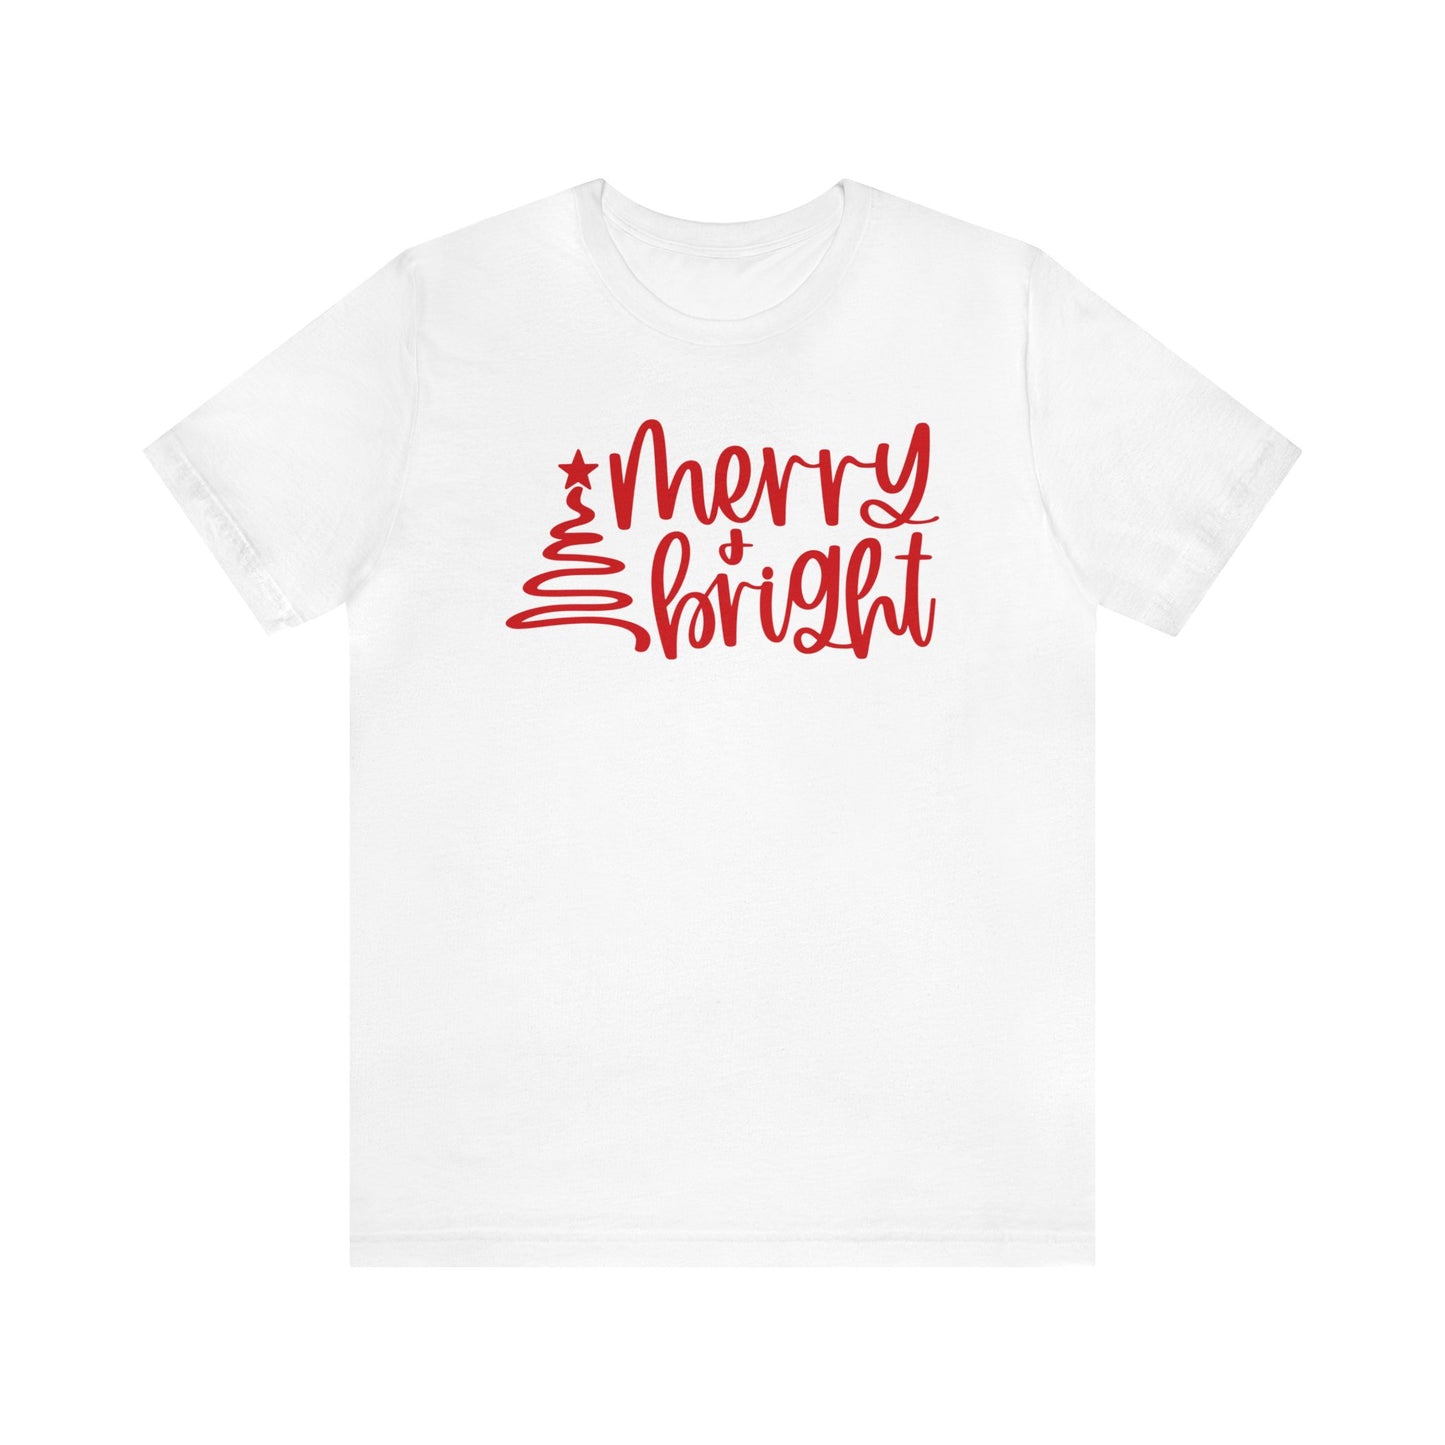 Merry and Bright Trees Christmas Shirt Short Sleeve Tee